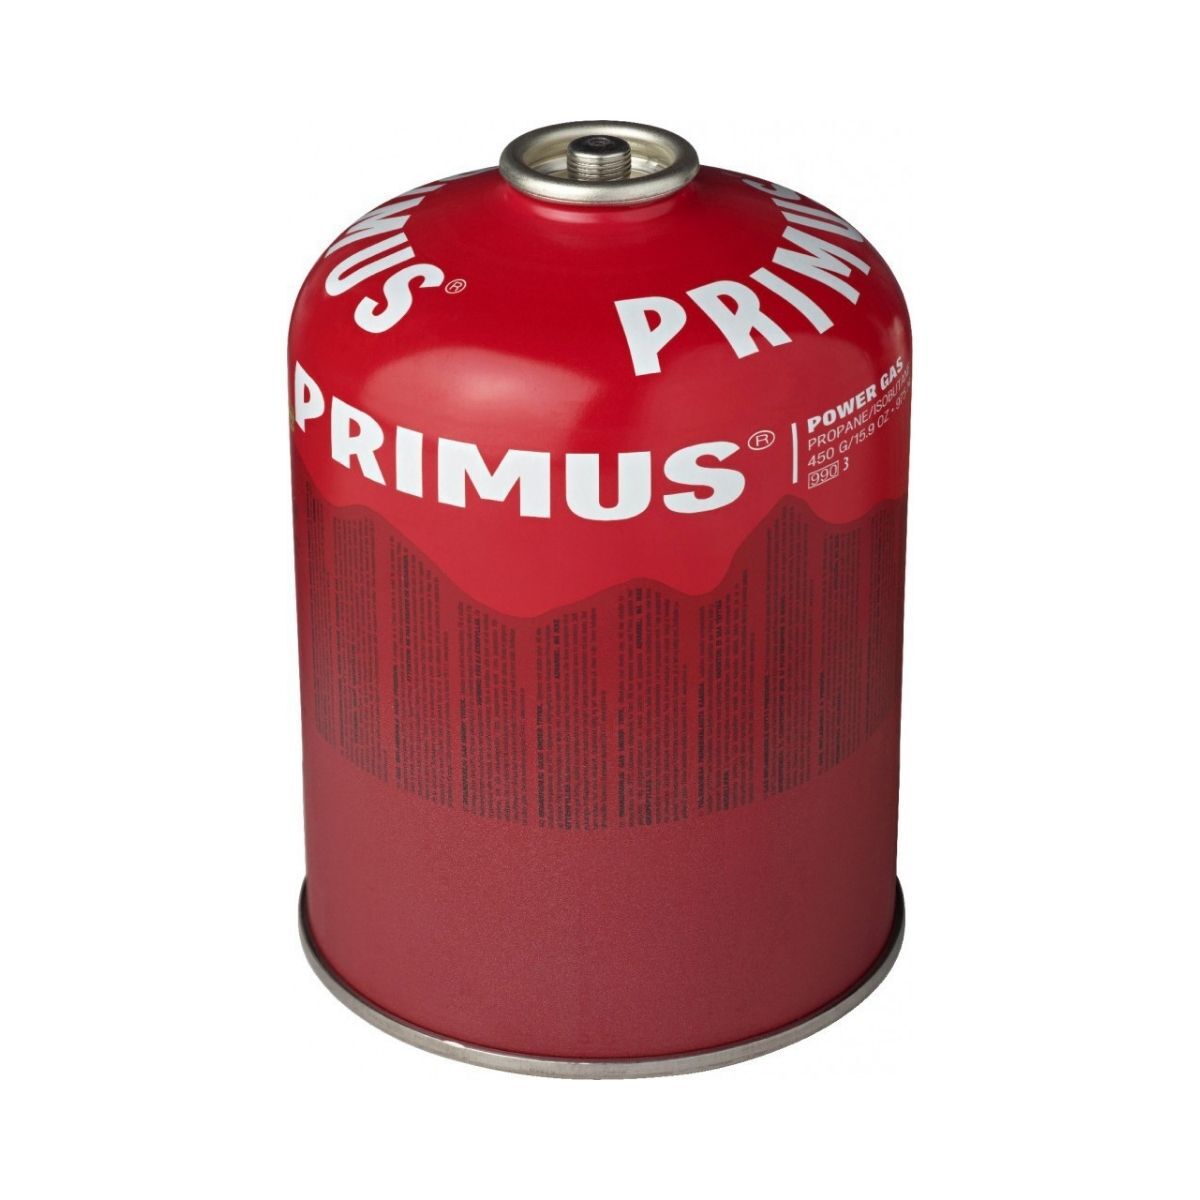 Primus Power Gas 450 g L2 - Cartuccia gas